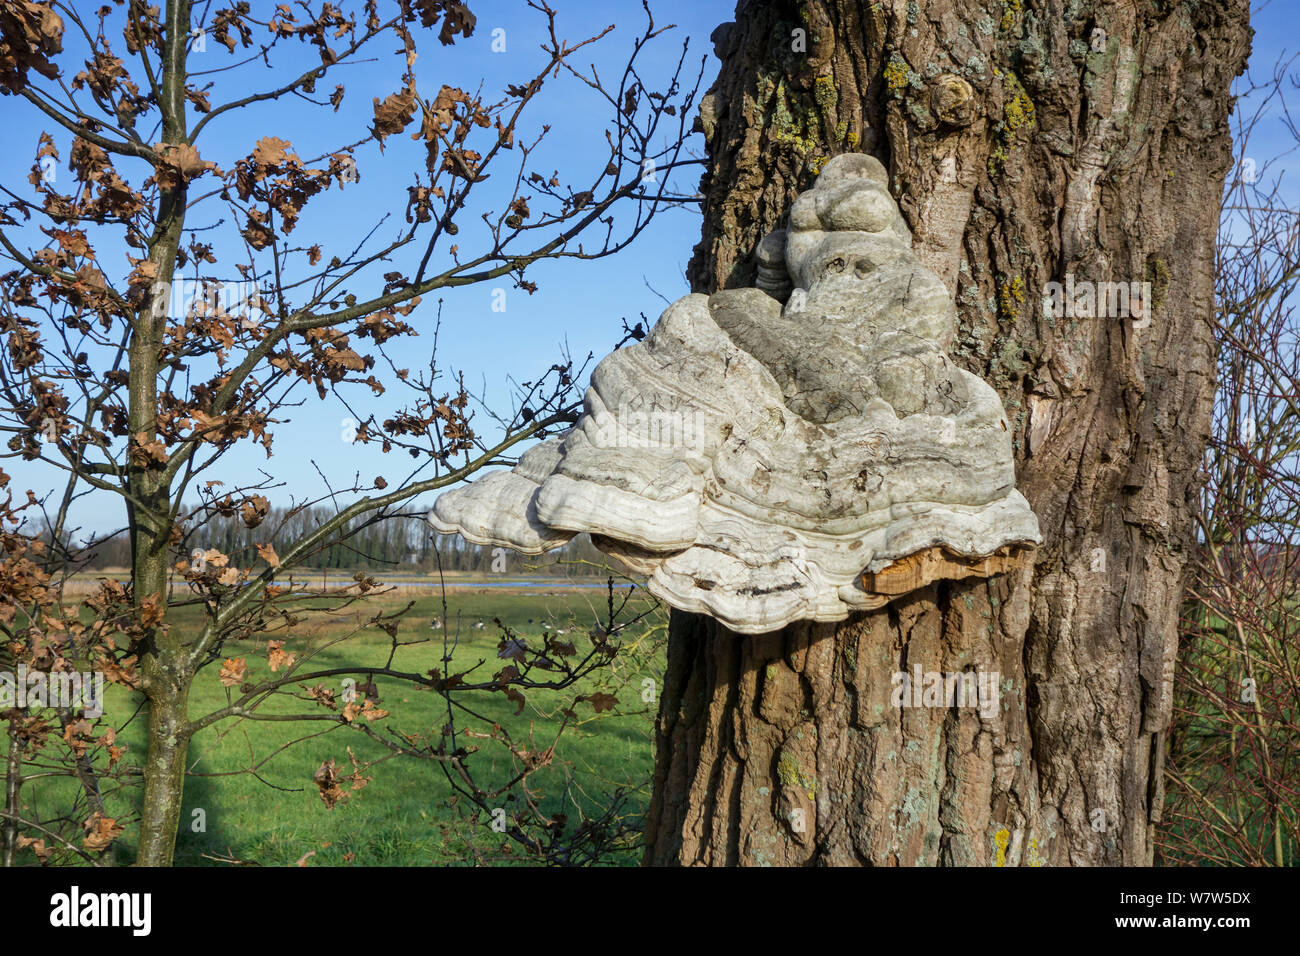 Tinder bracket fungus (Fomes fomentarius) growing on a Pedunculate oak (Quercus robur), Belgium, December. Stock Photo